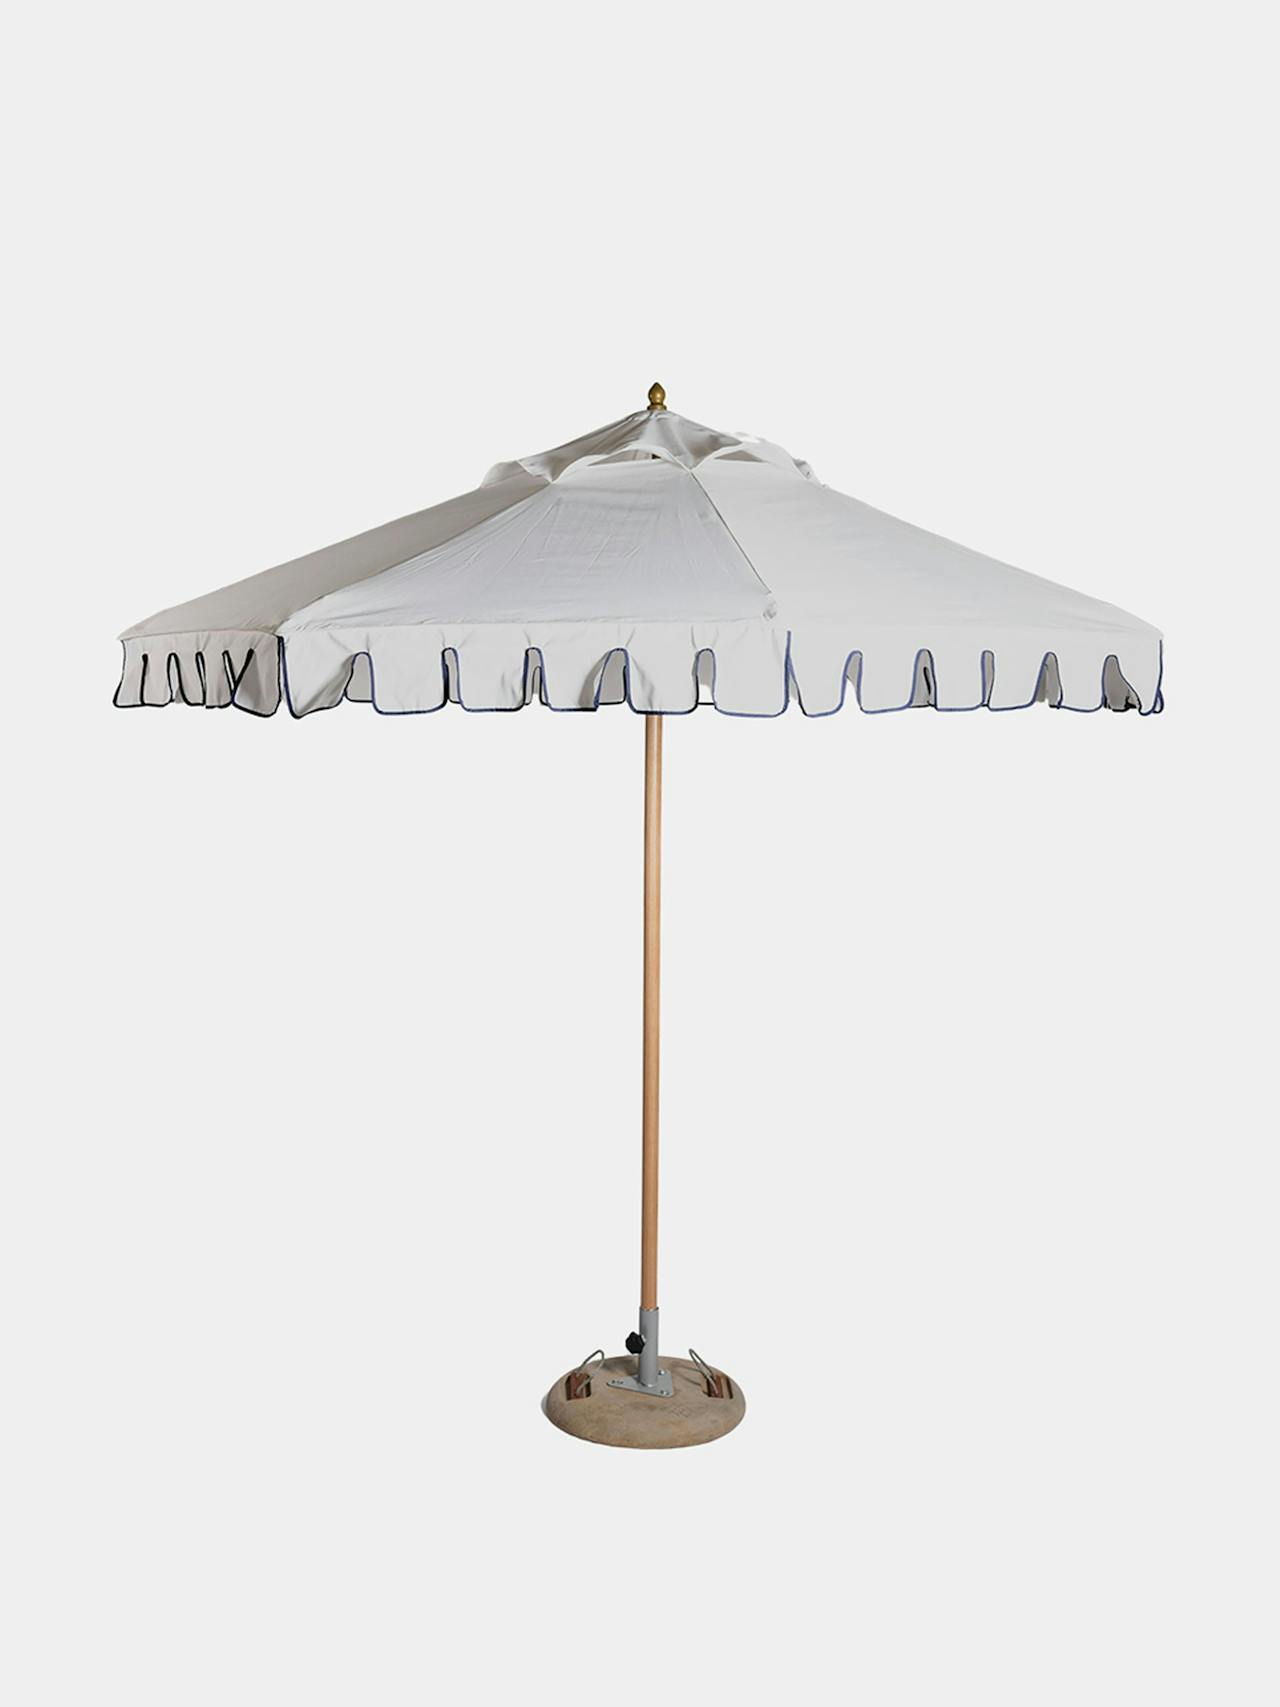 Scalloped parasol with navy trim in ecru, 400cm